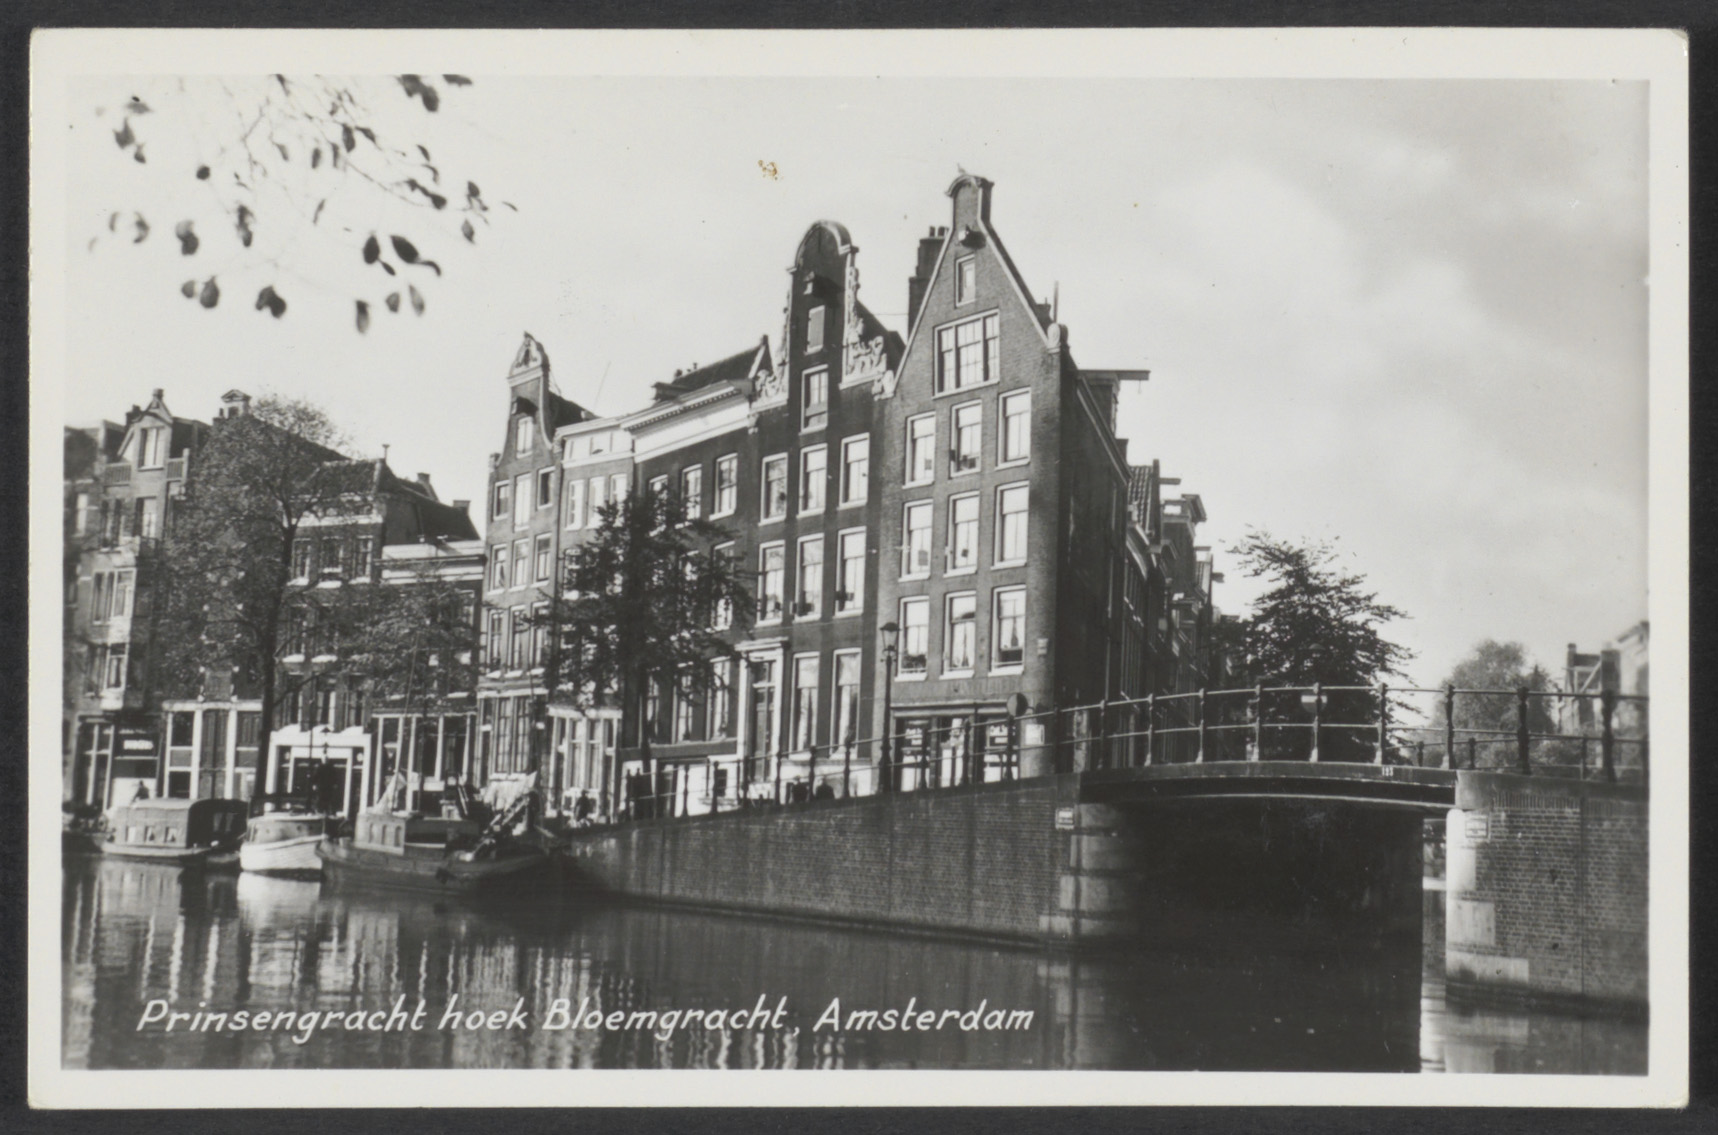 Fotograaf onbekend. Fotocollectie Anne Frank Stichting